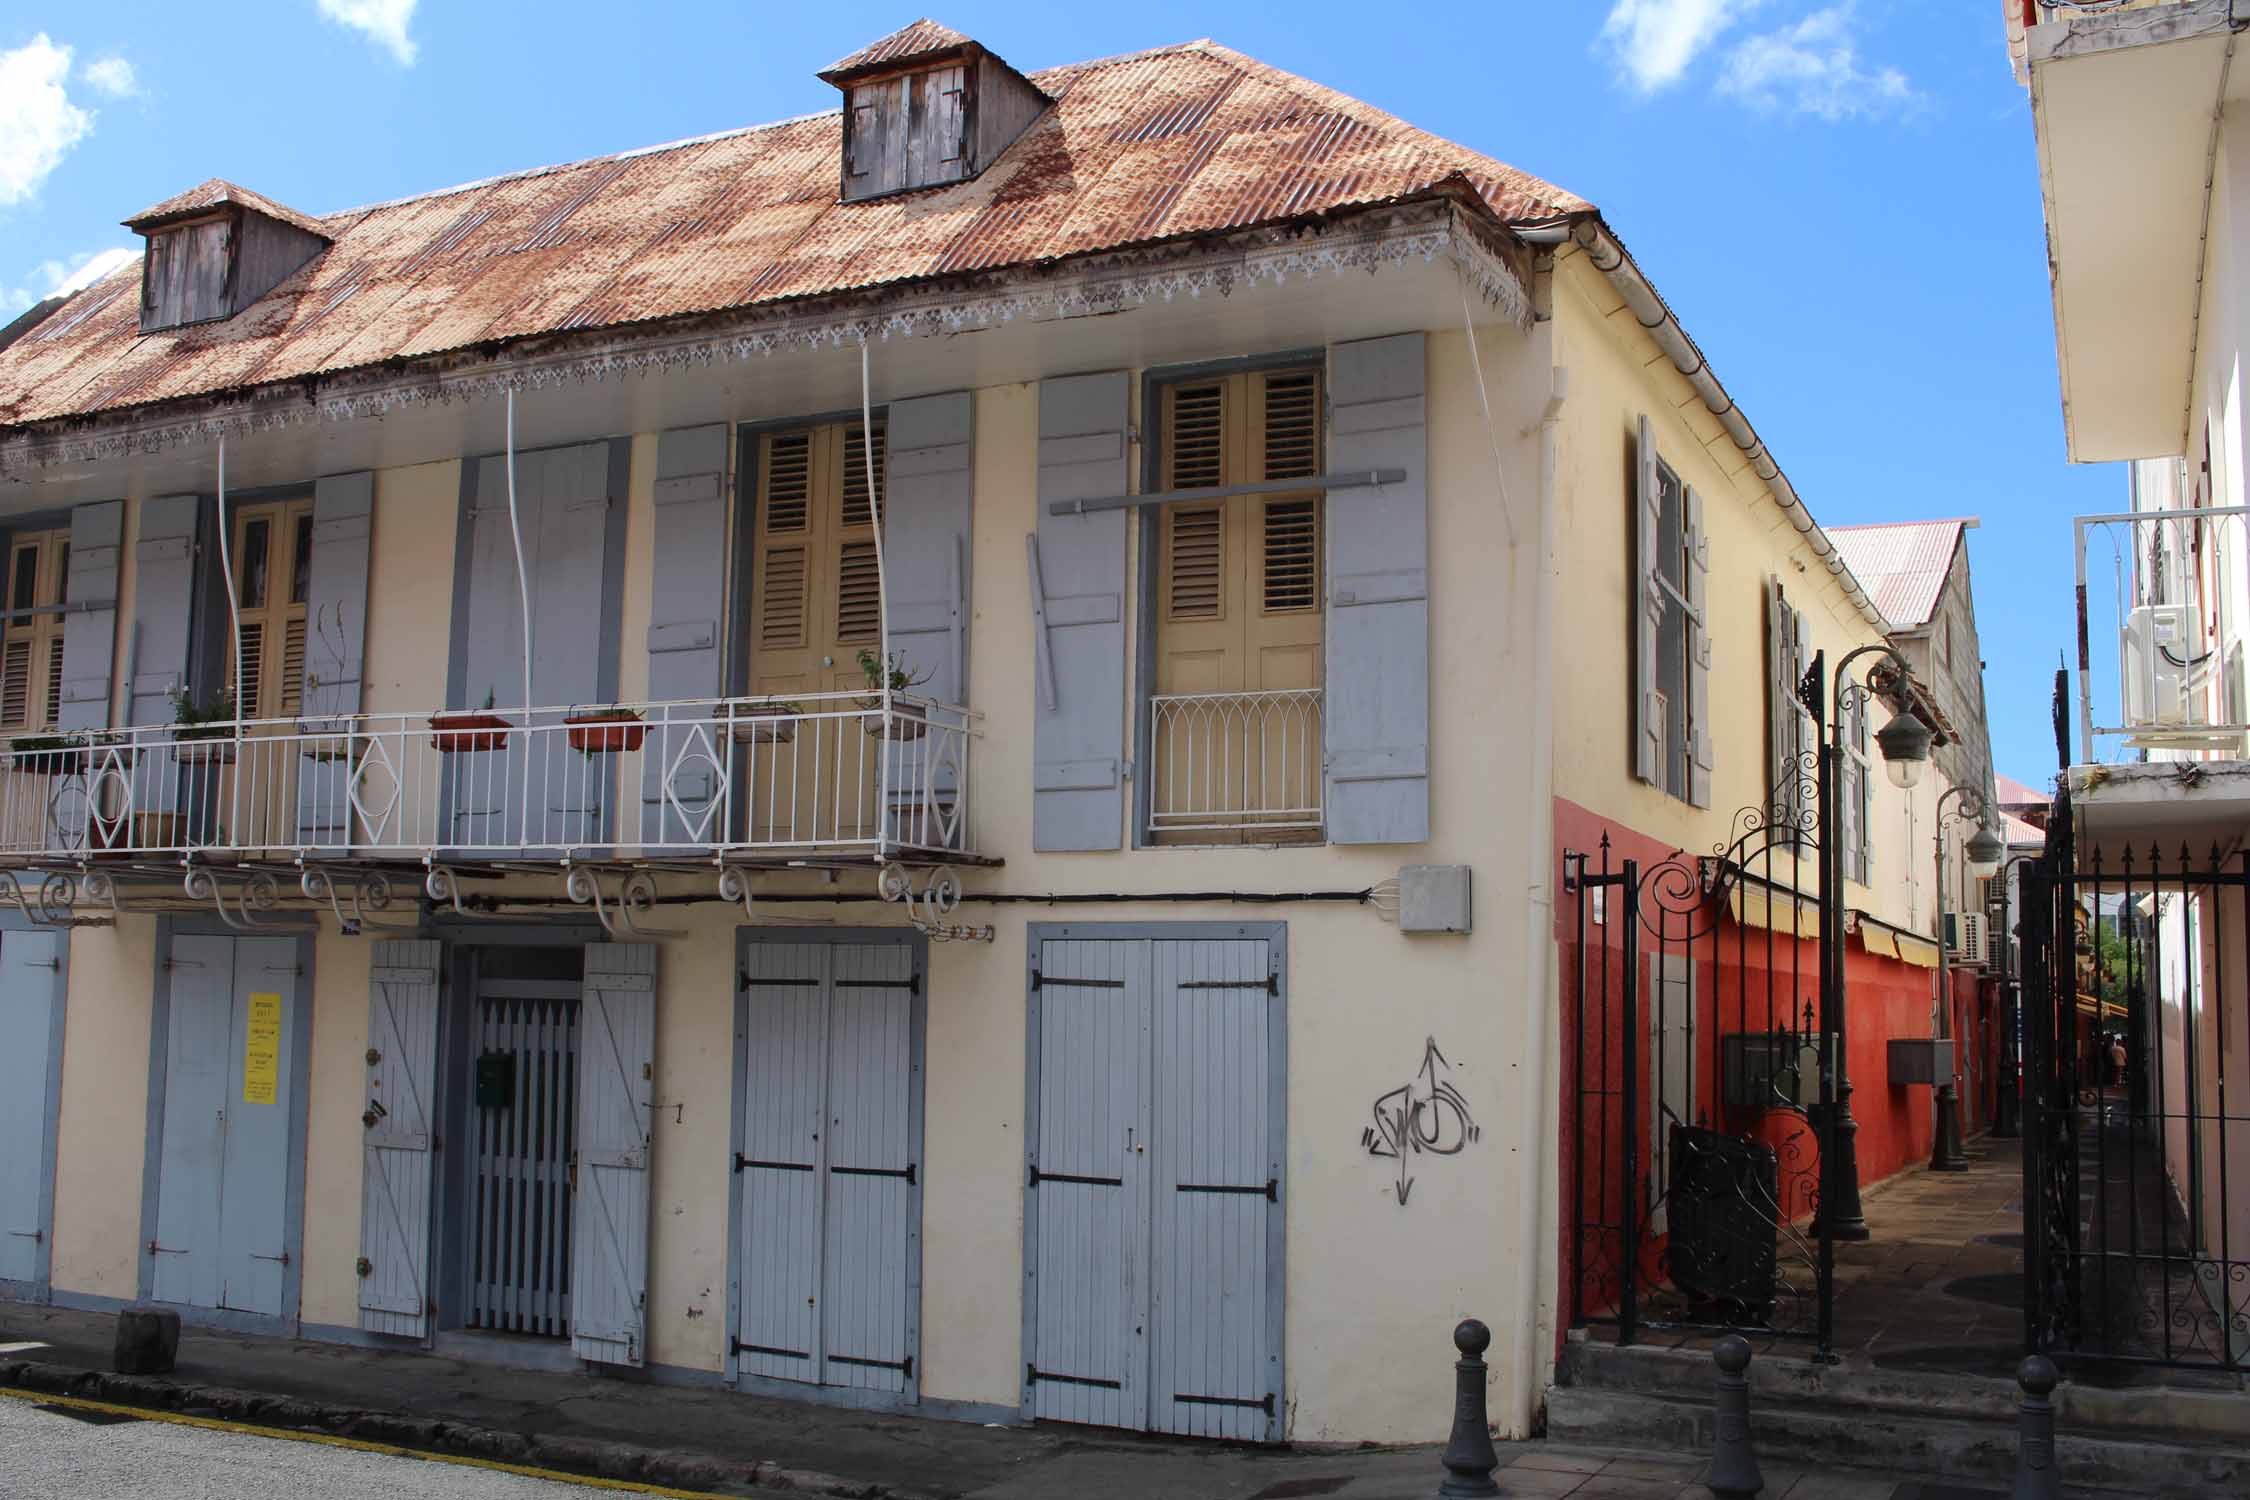 Basse-Terre, Guadeloupe, maison typique